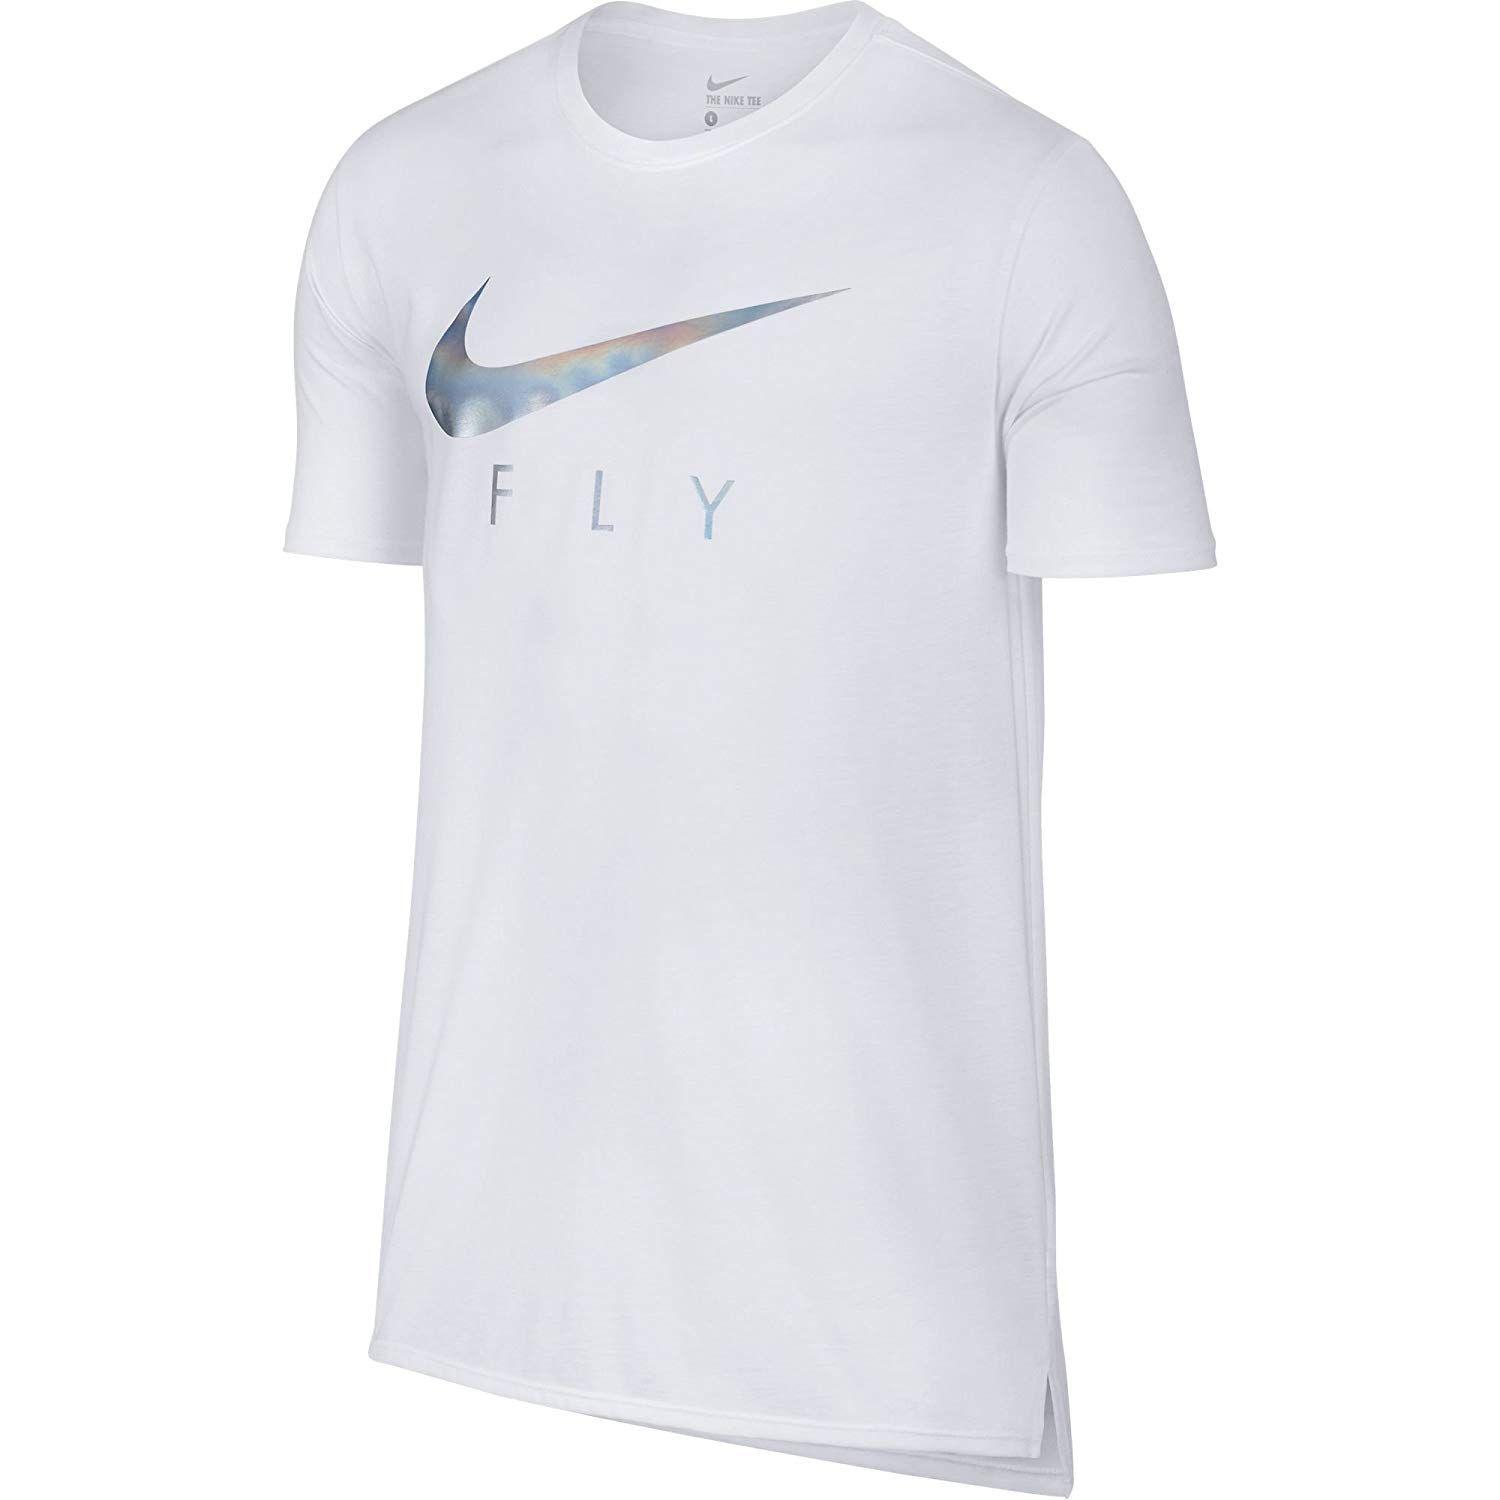 Silver Nike Logo - Nike Swoosh Logo Printed Fly Drop Tail Men's T Shirt